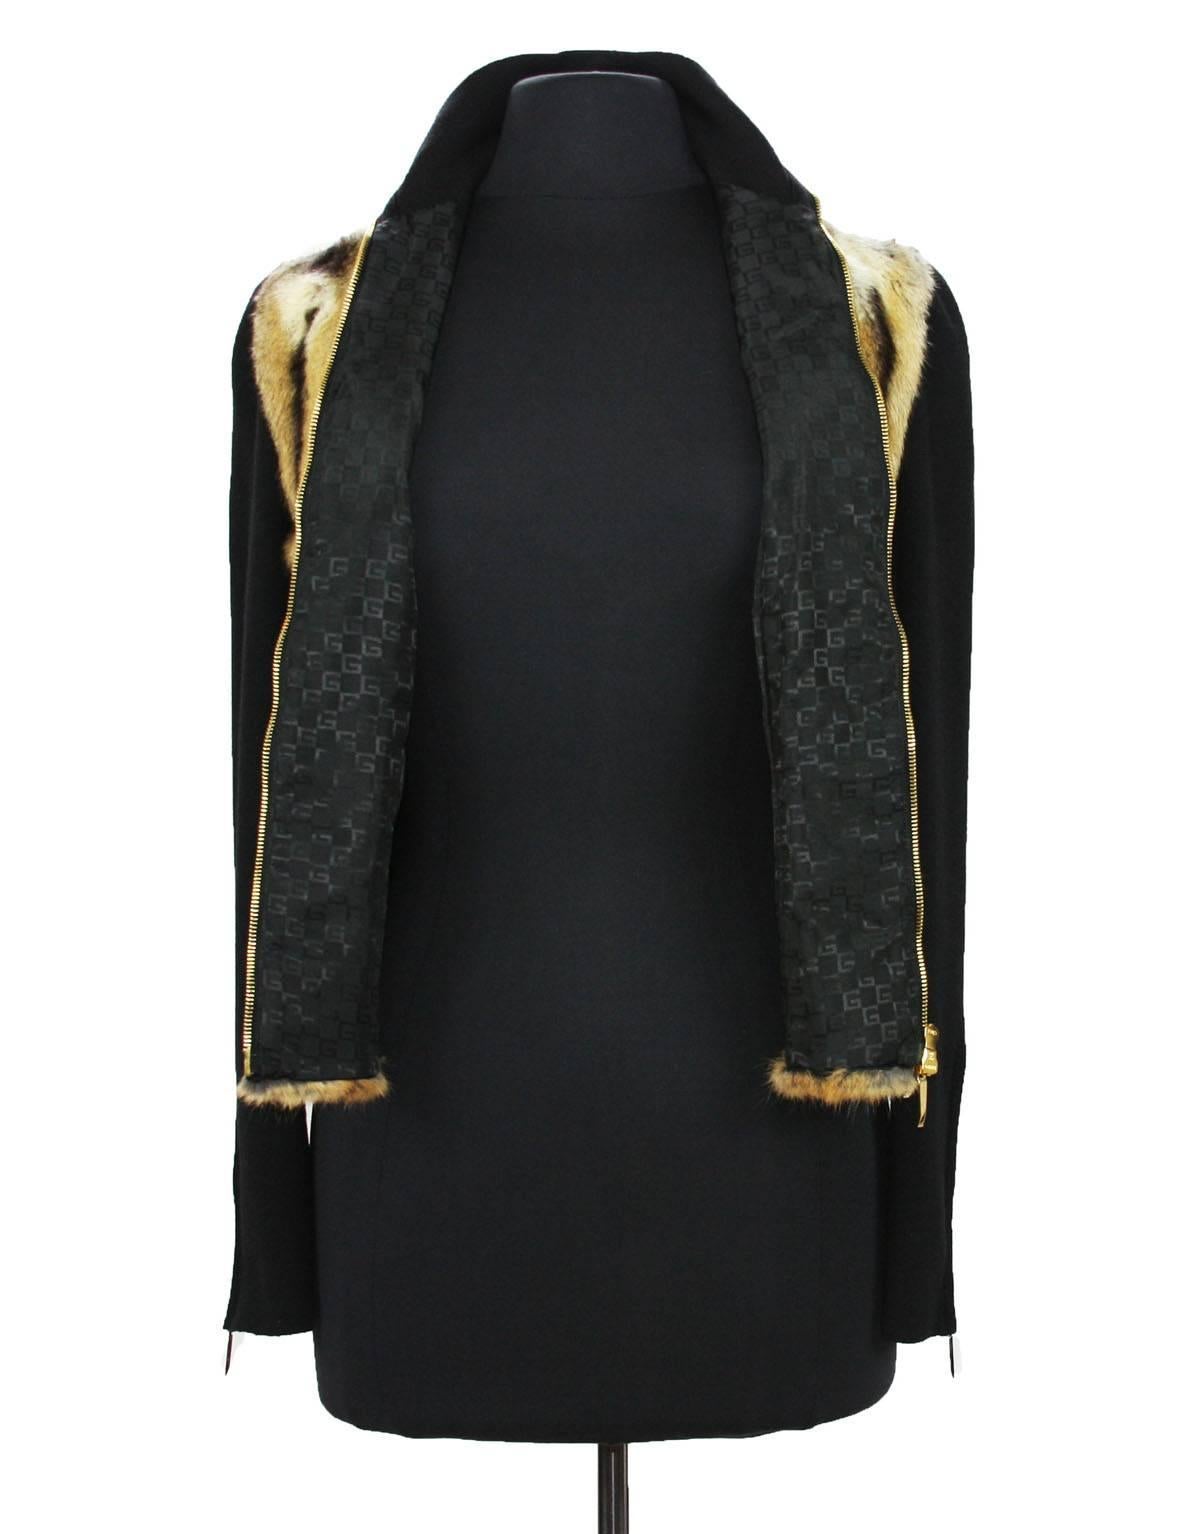 Black New TOM FORD for GUCCI F/W 2000 Fur Wool Silk Cashmere Cardigan Sweater Jacket S